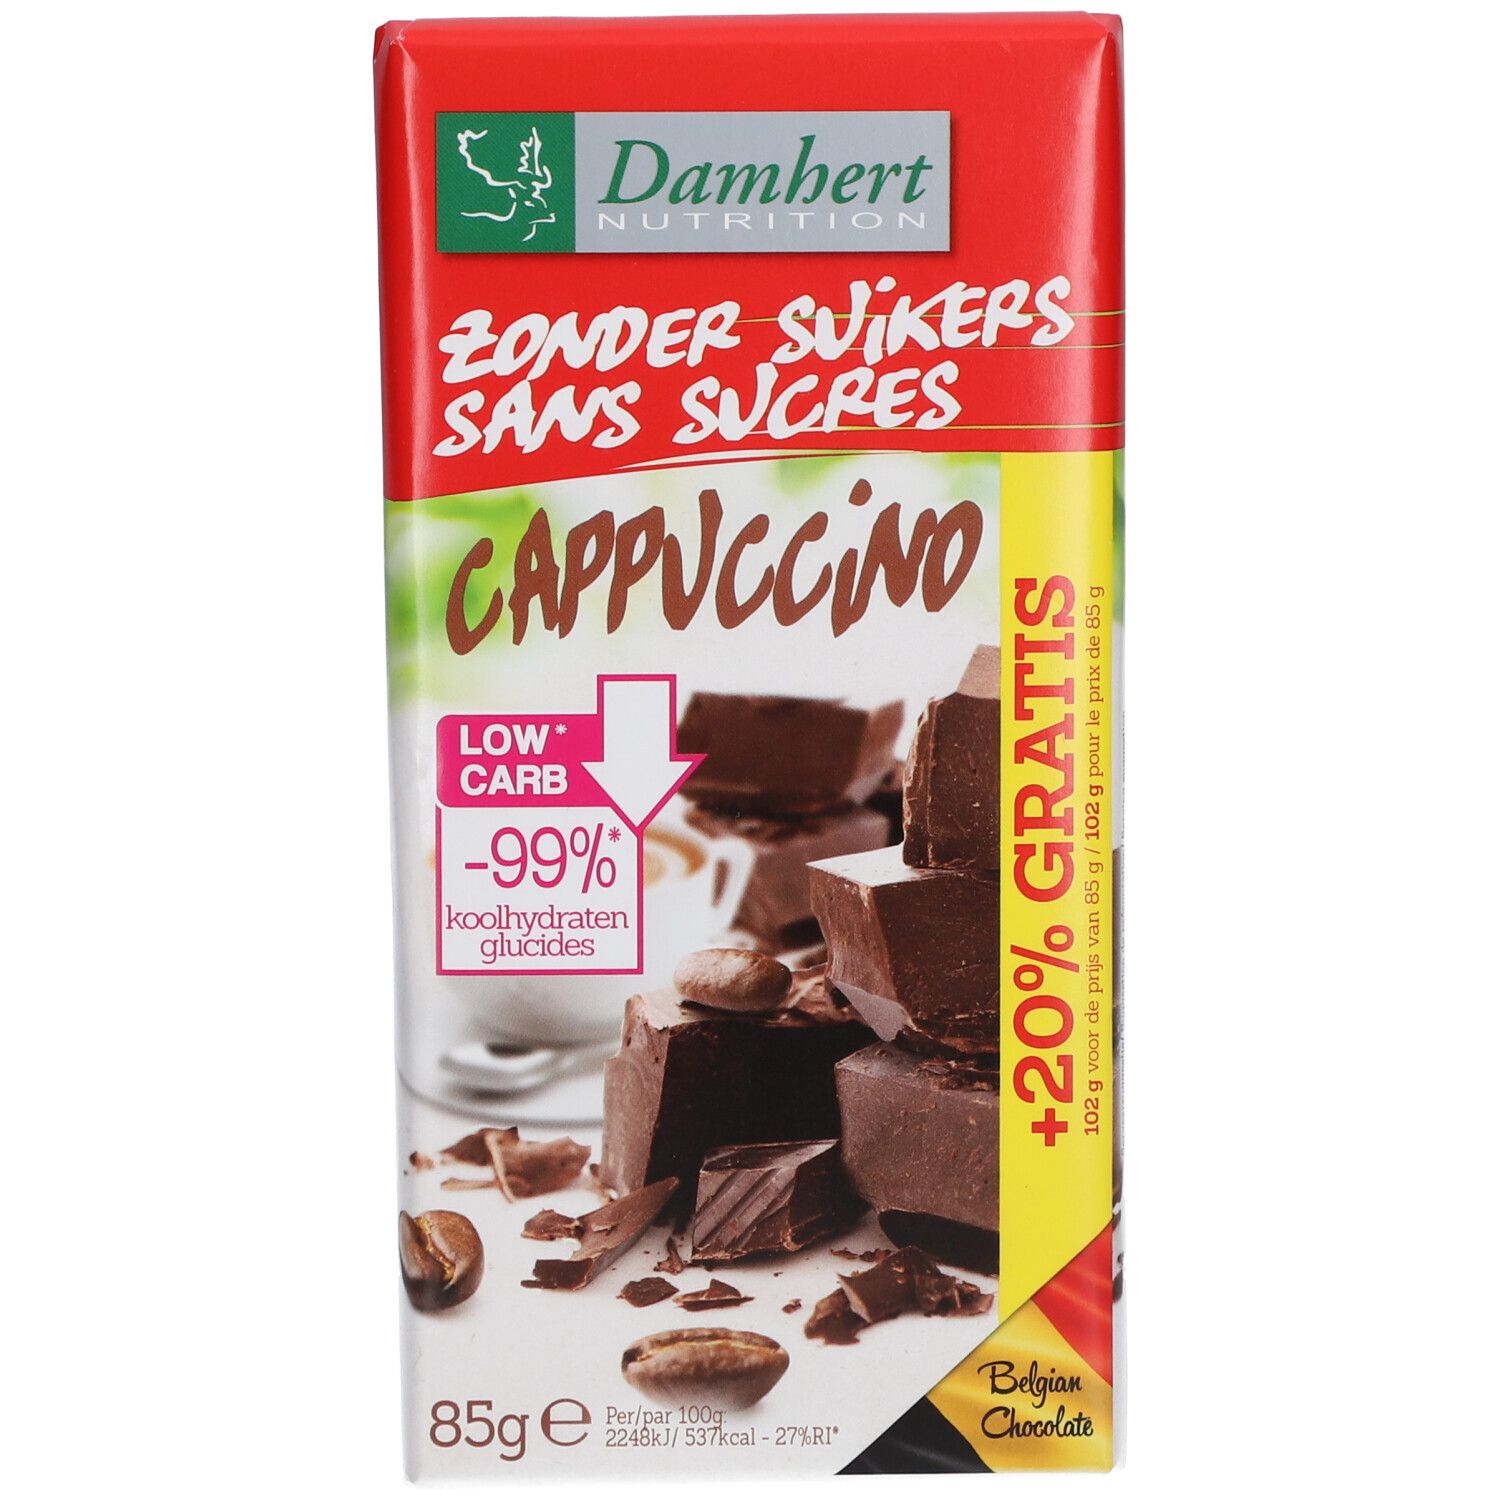 Damhert Tablette de chocolat cappuccino sans sucre